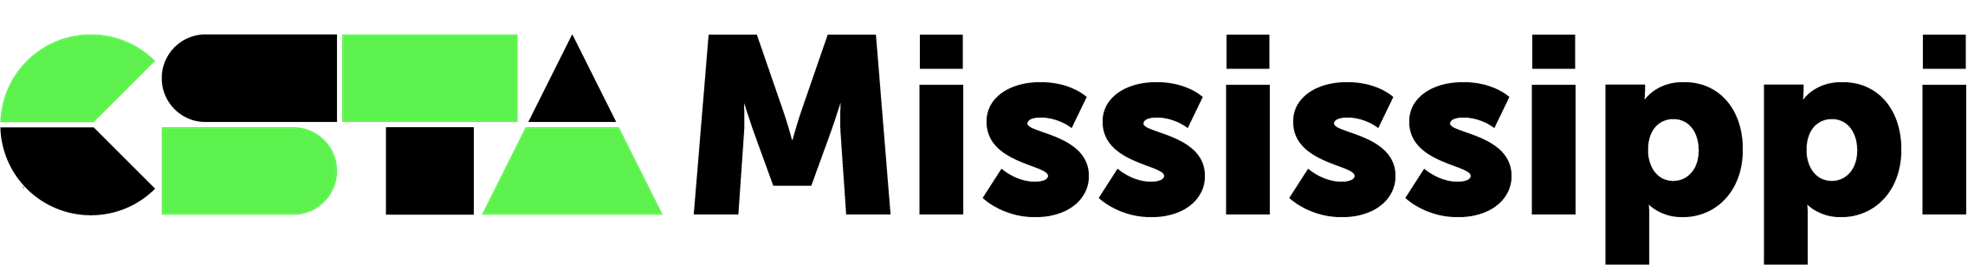 CSTA Mississippi logo